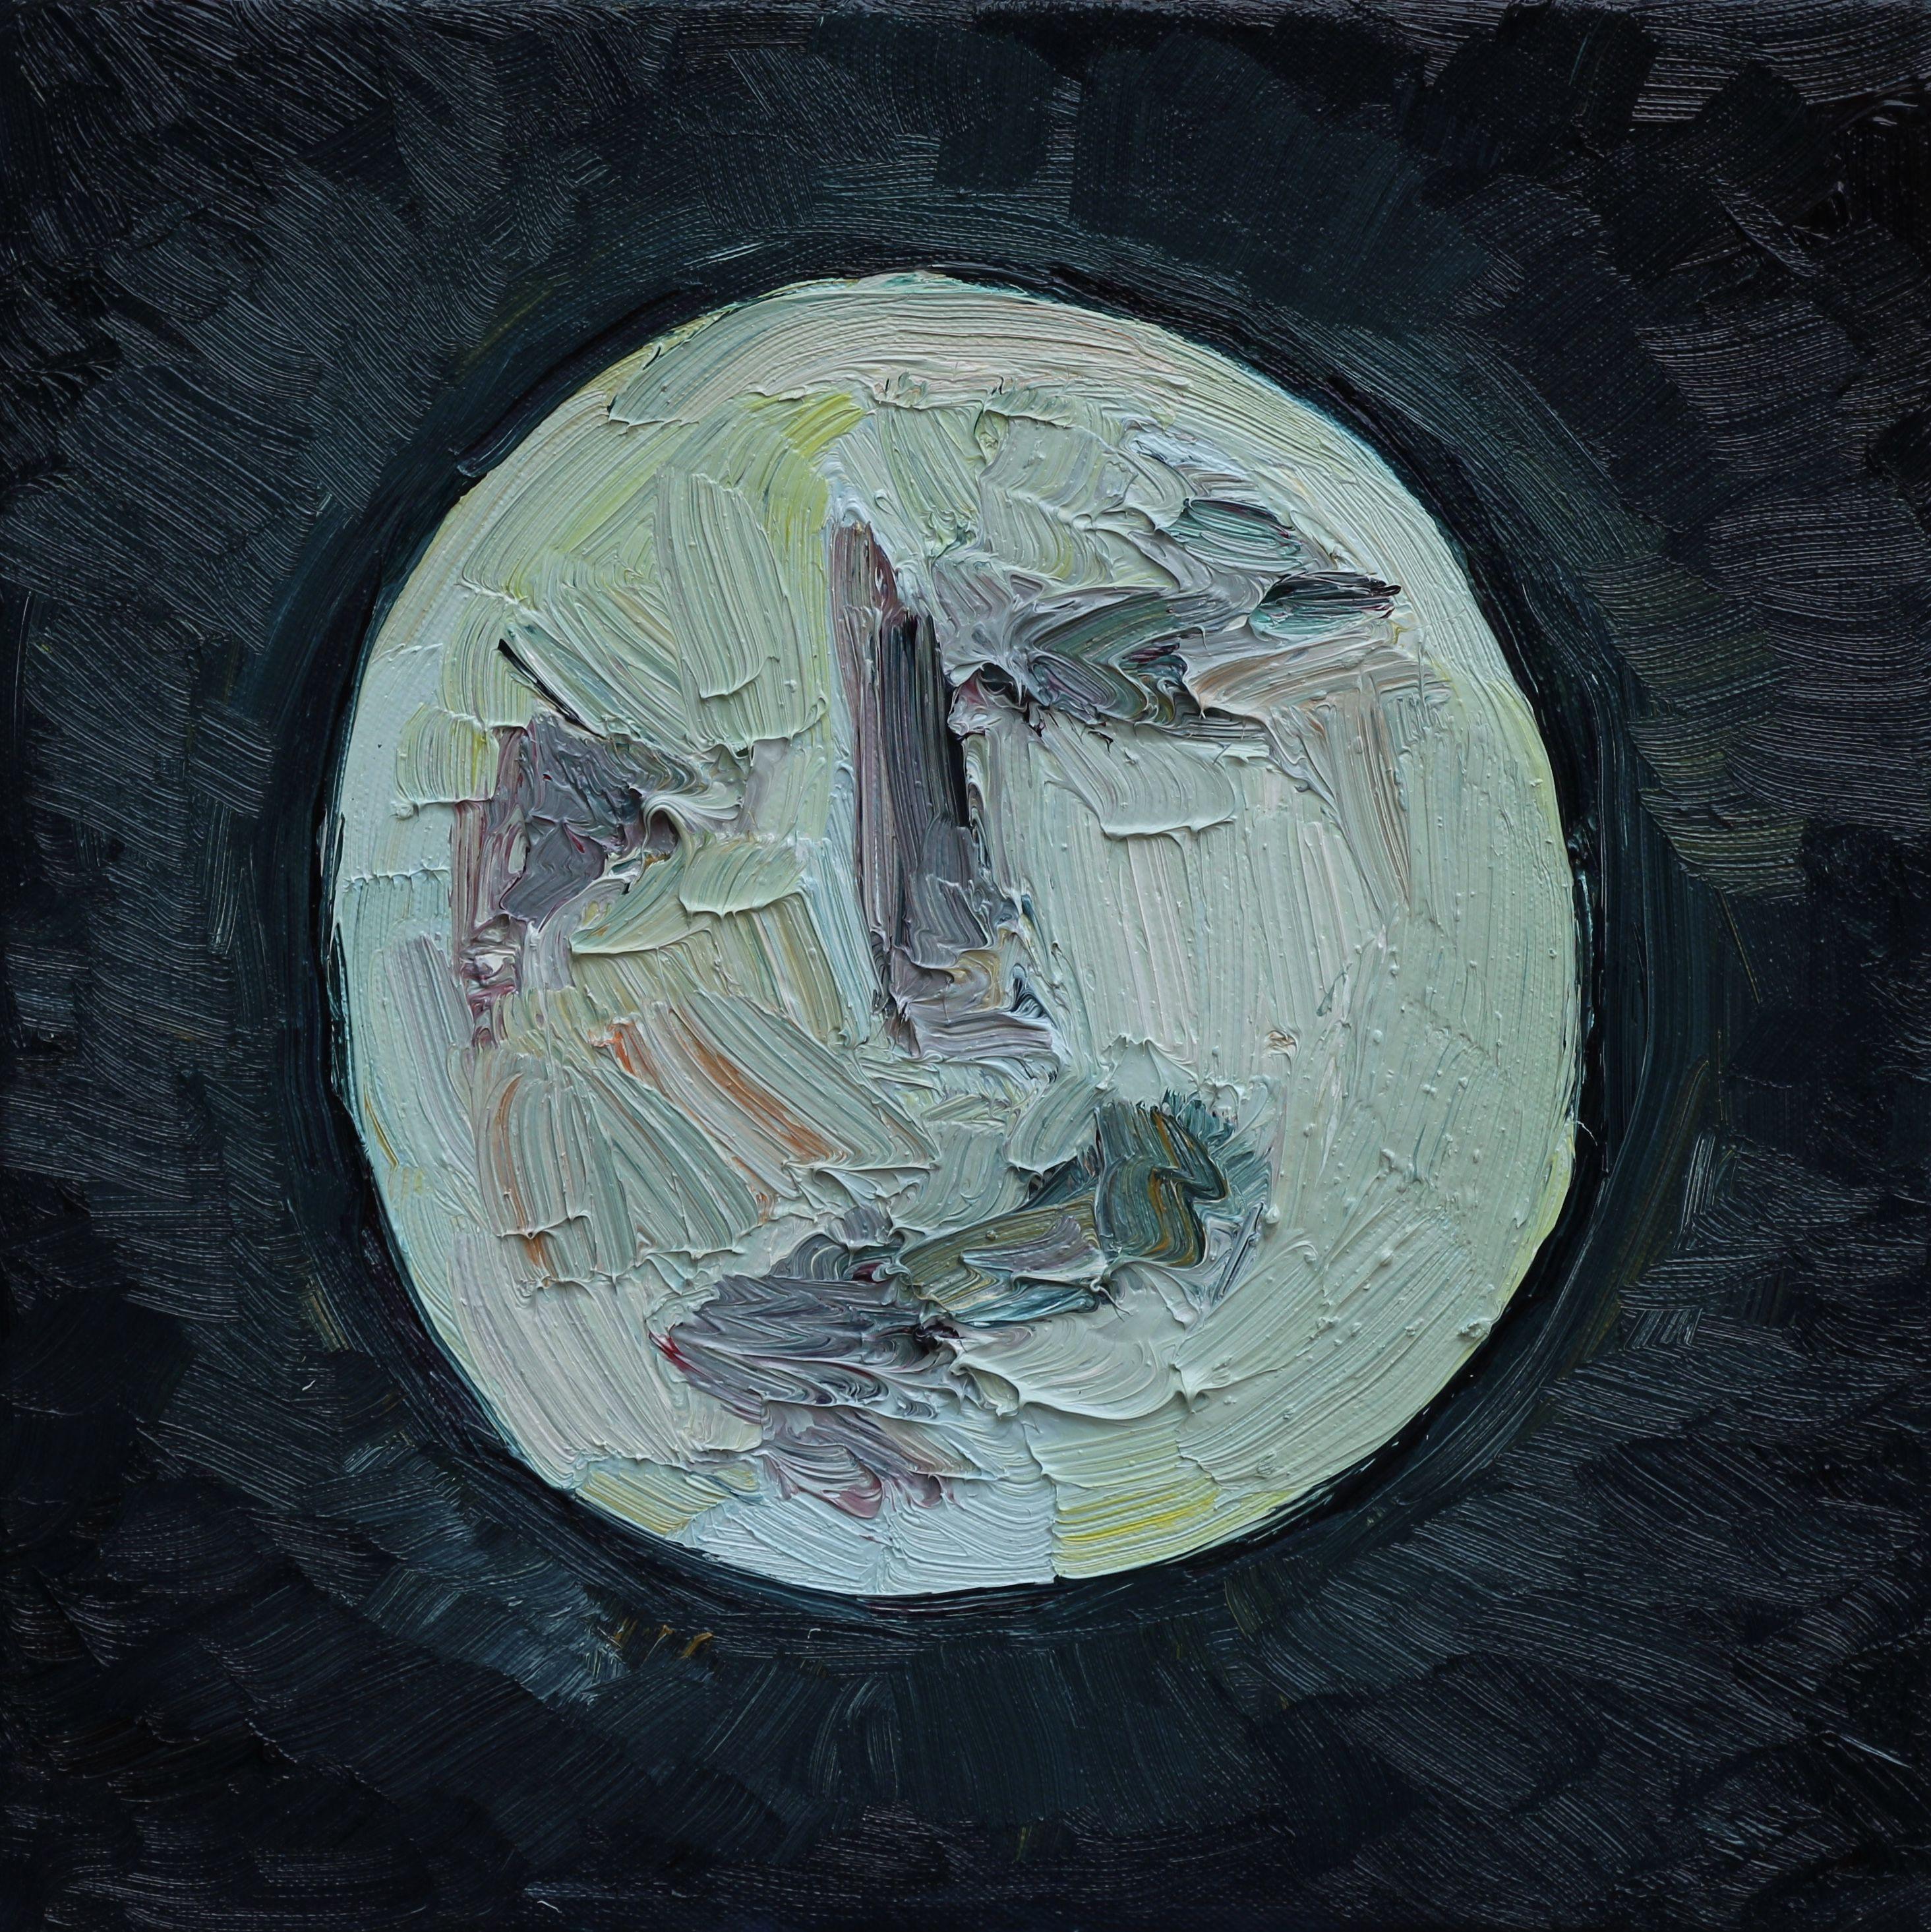 Full moon, Gemälde, Öl auf Leinwand – Painting von John Kilduff